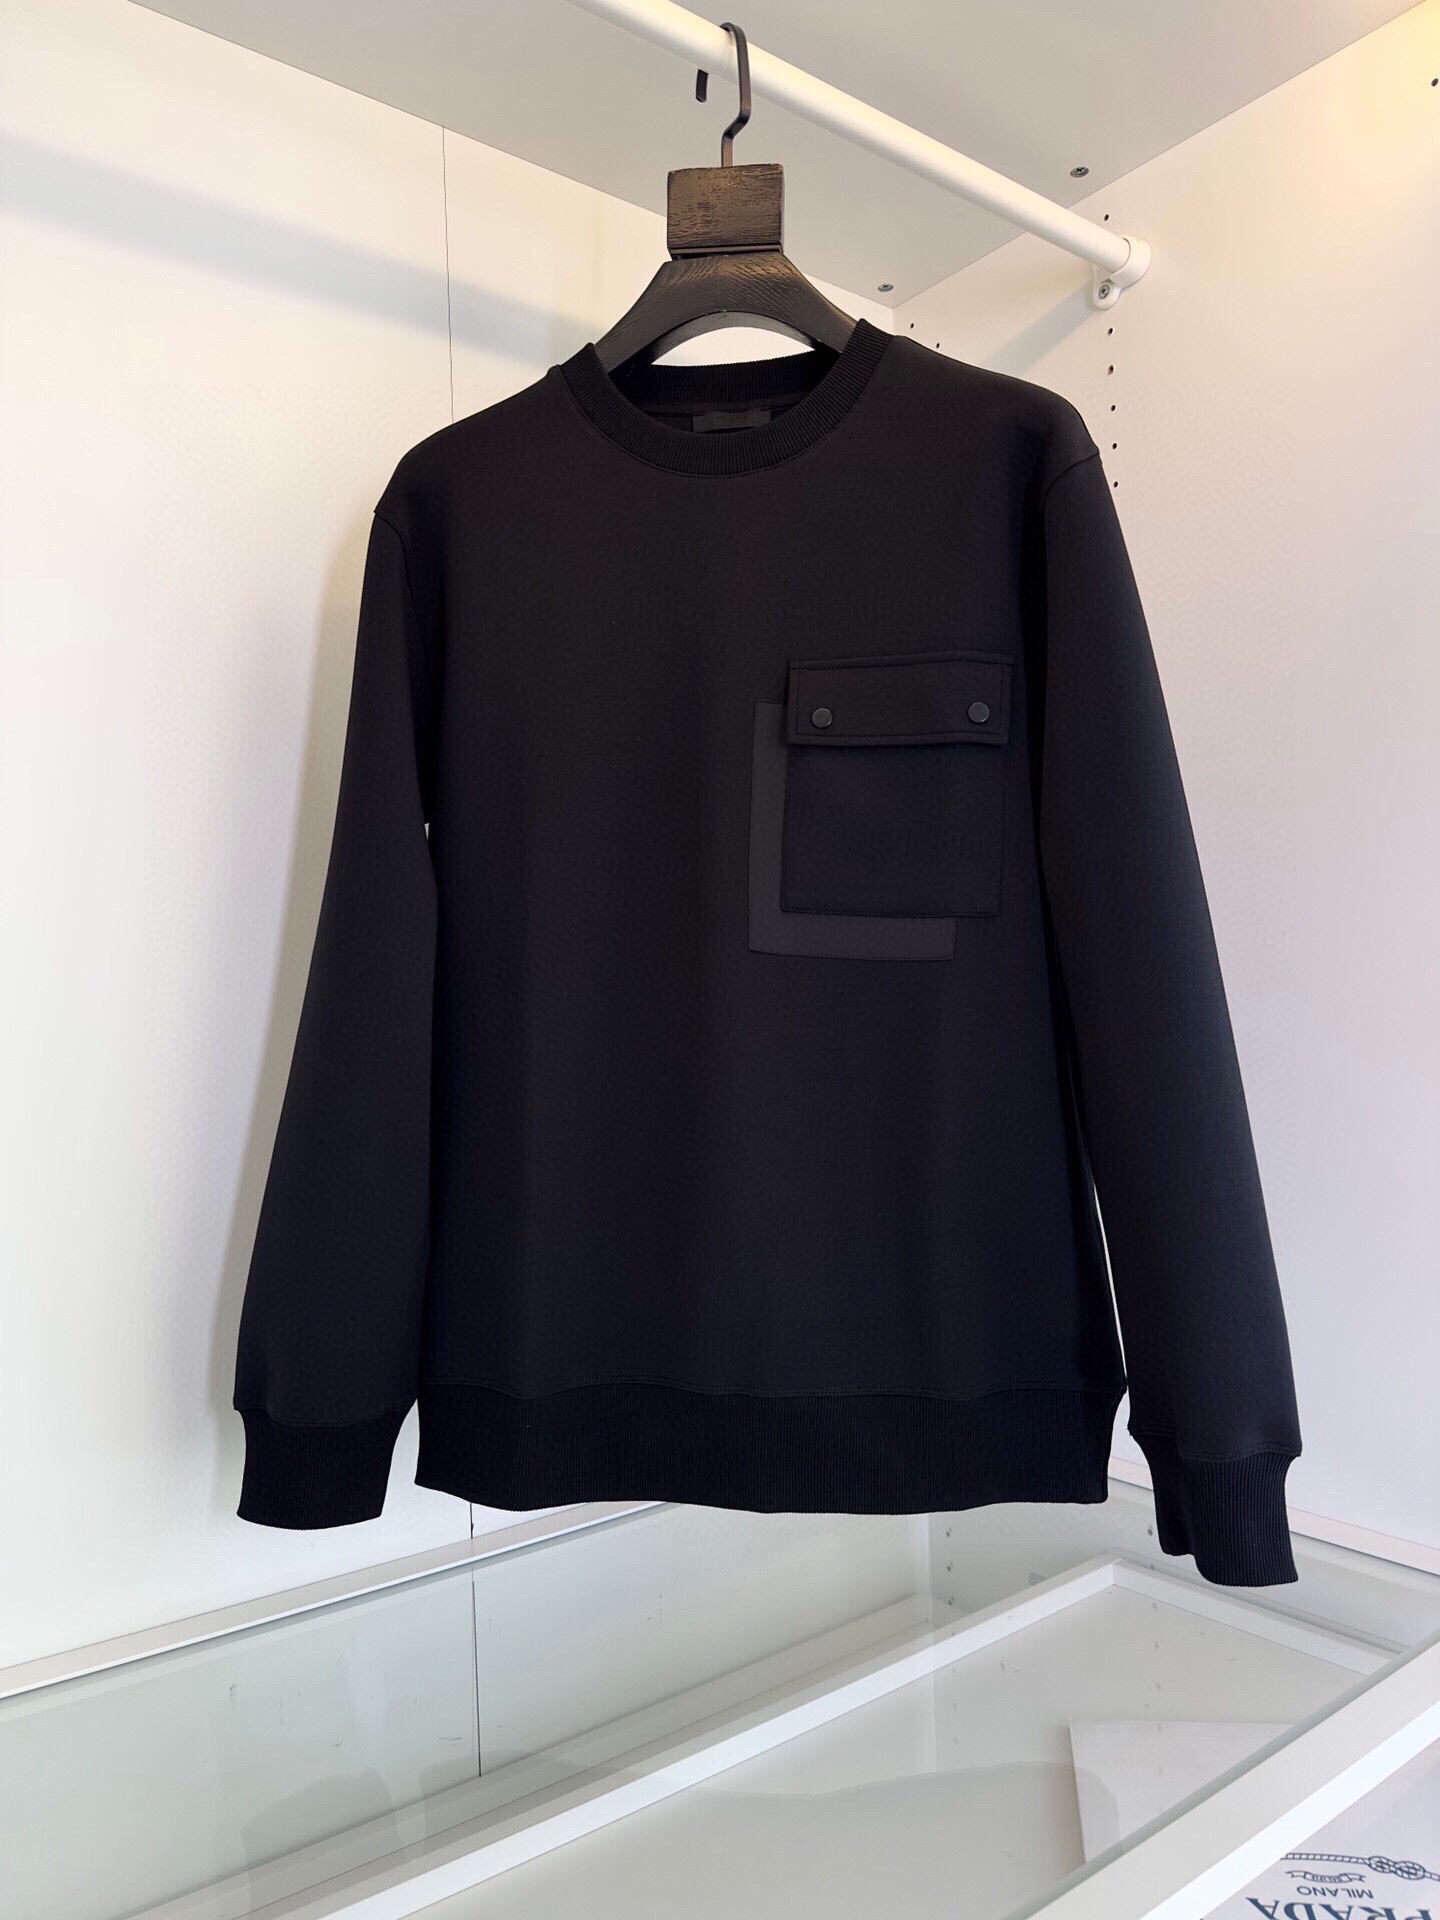 Prada Clothing Coats & Jackets Sweatshirts Black Grey Light Gray Splicing Nylon Fall/Winter Collection Fashion Casual